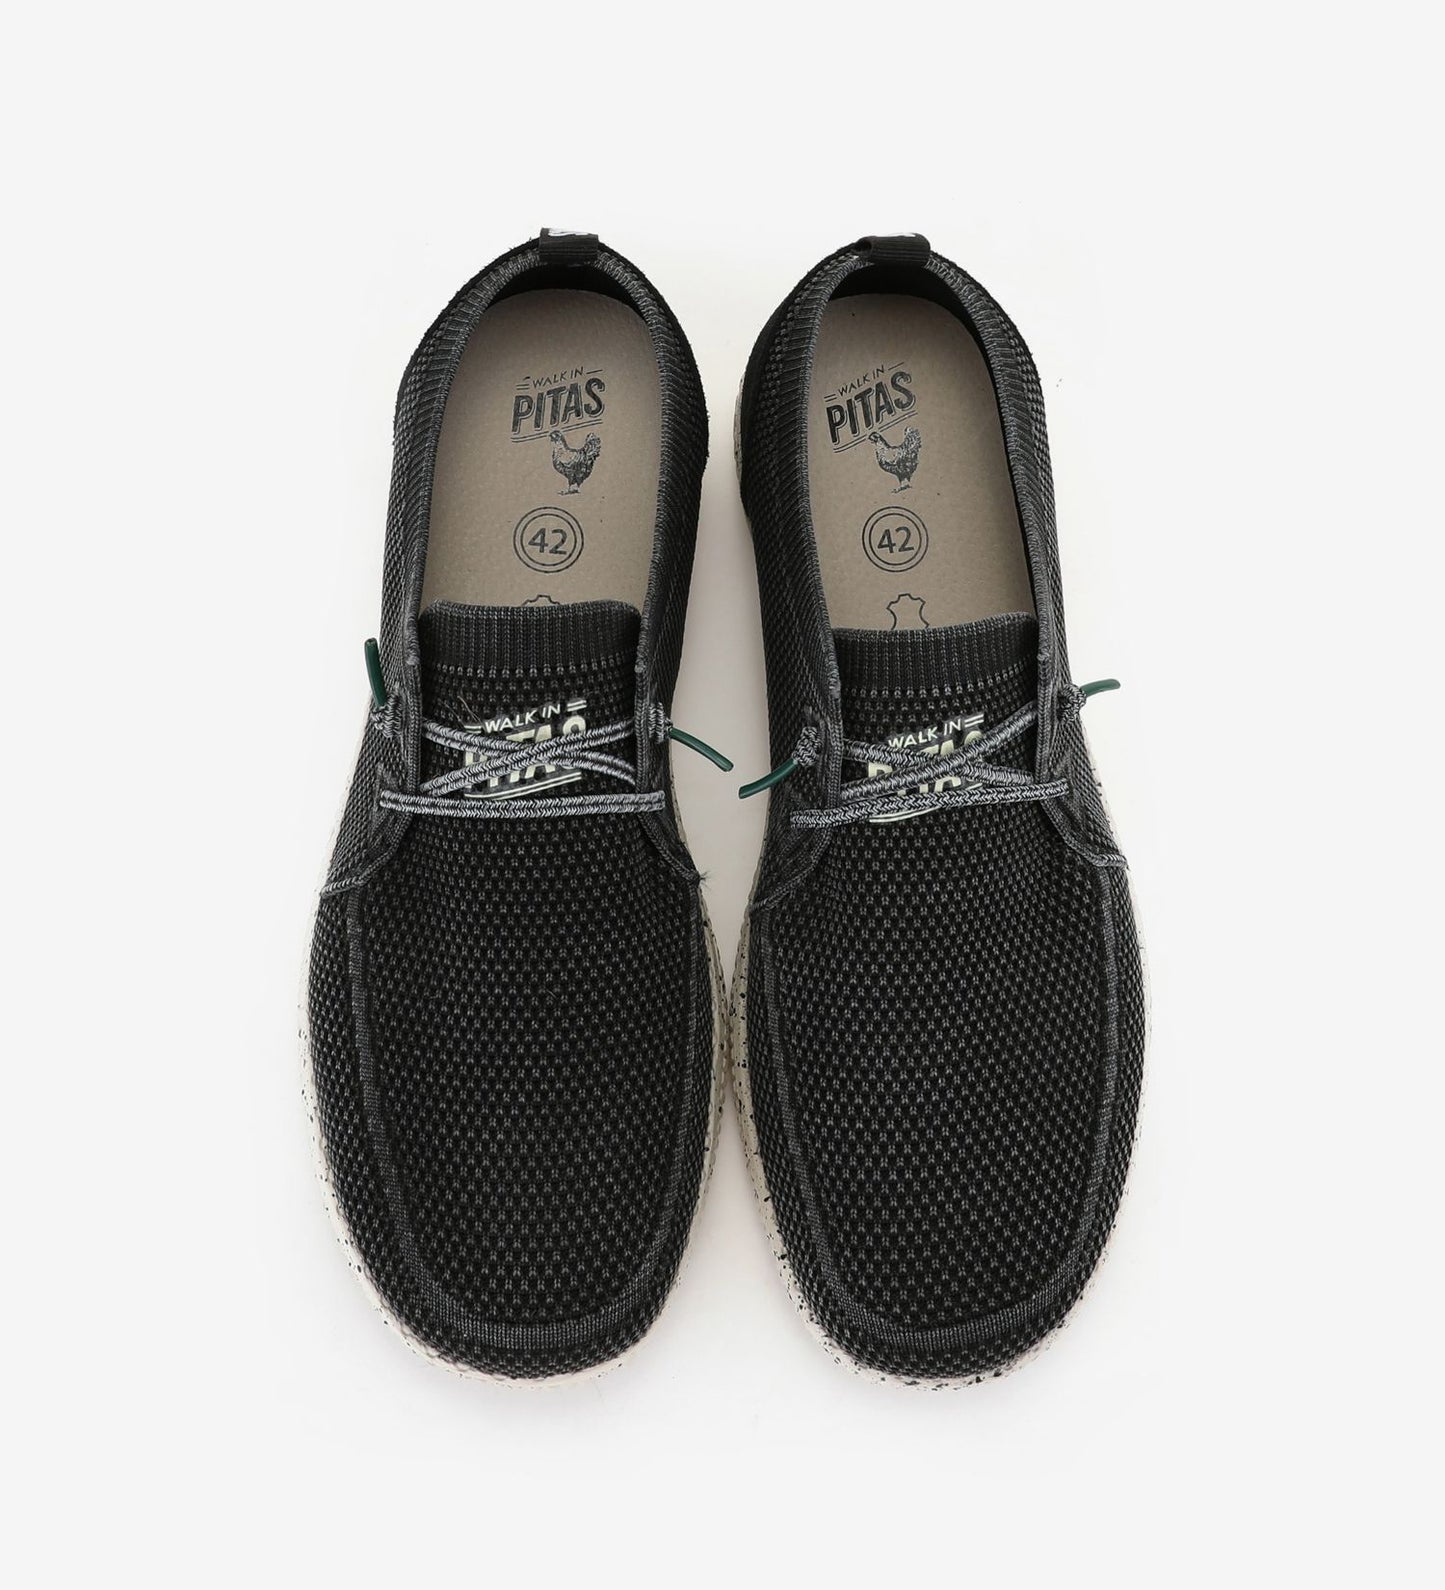 WALK IN PITAS wp150-fly  washed wallabi zapato cordón de algodón ultra ligero negro